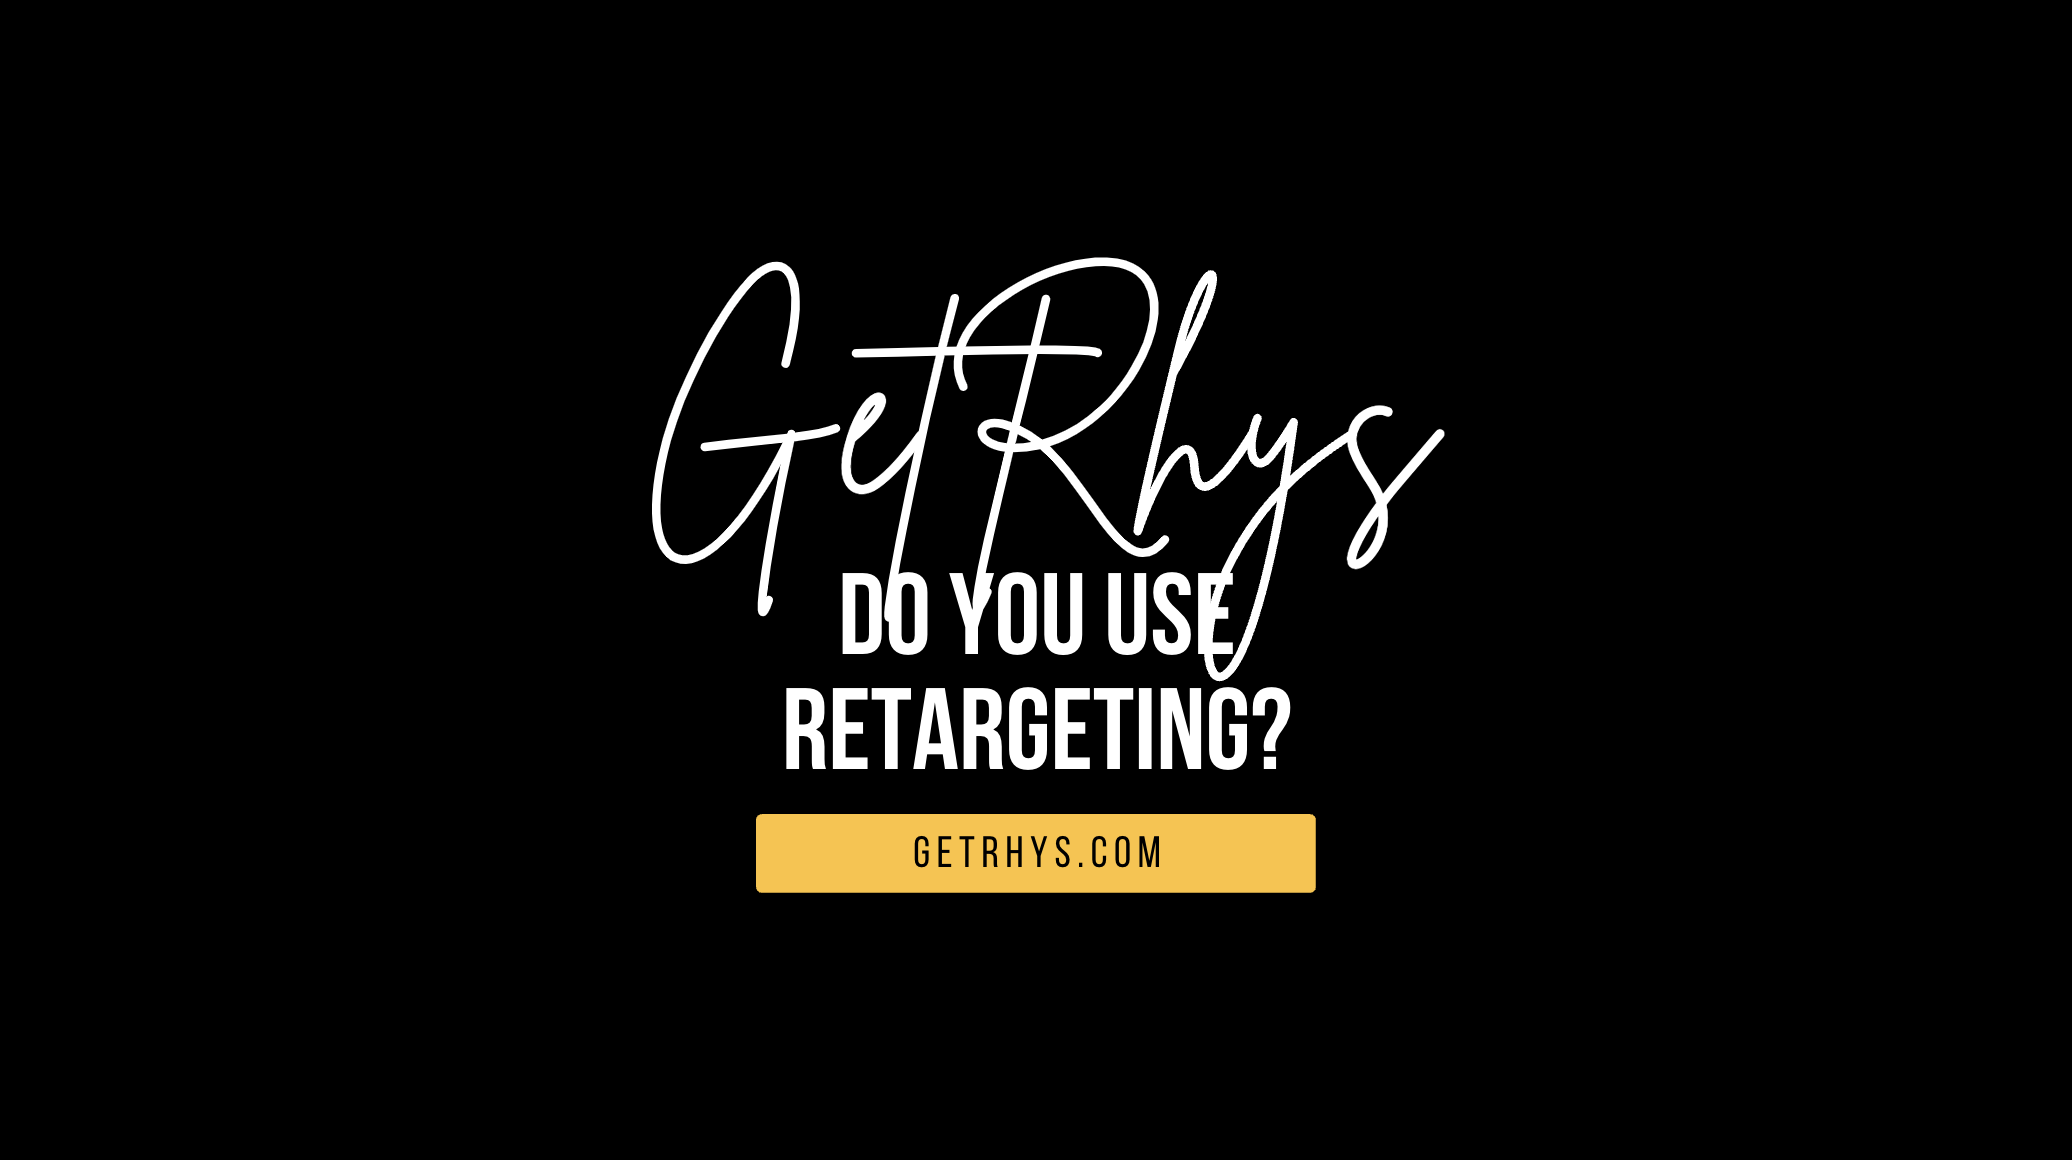 Do you use retargeting?